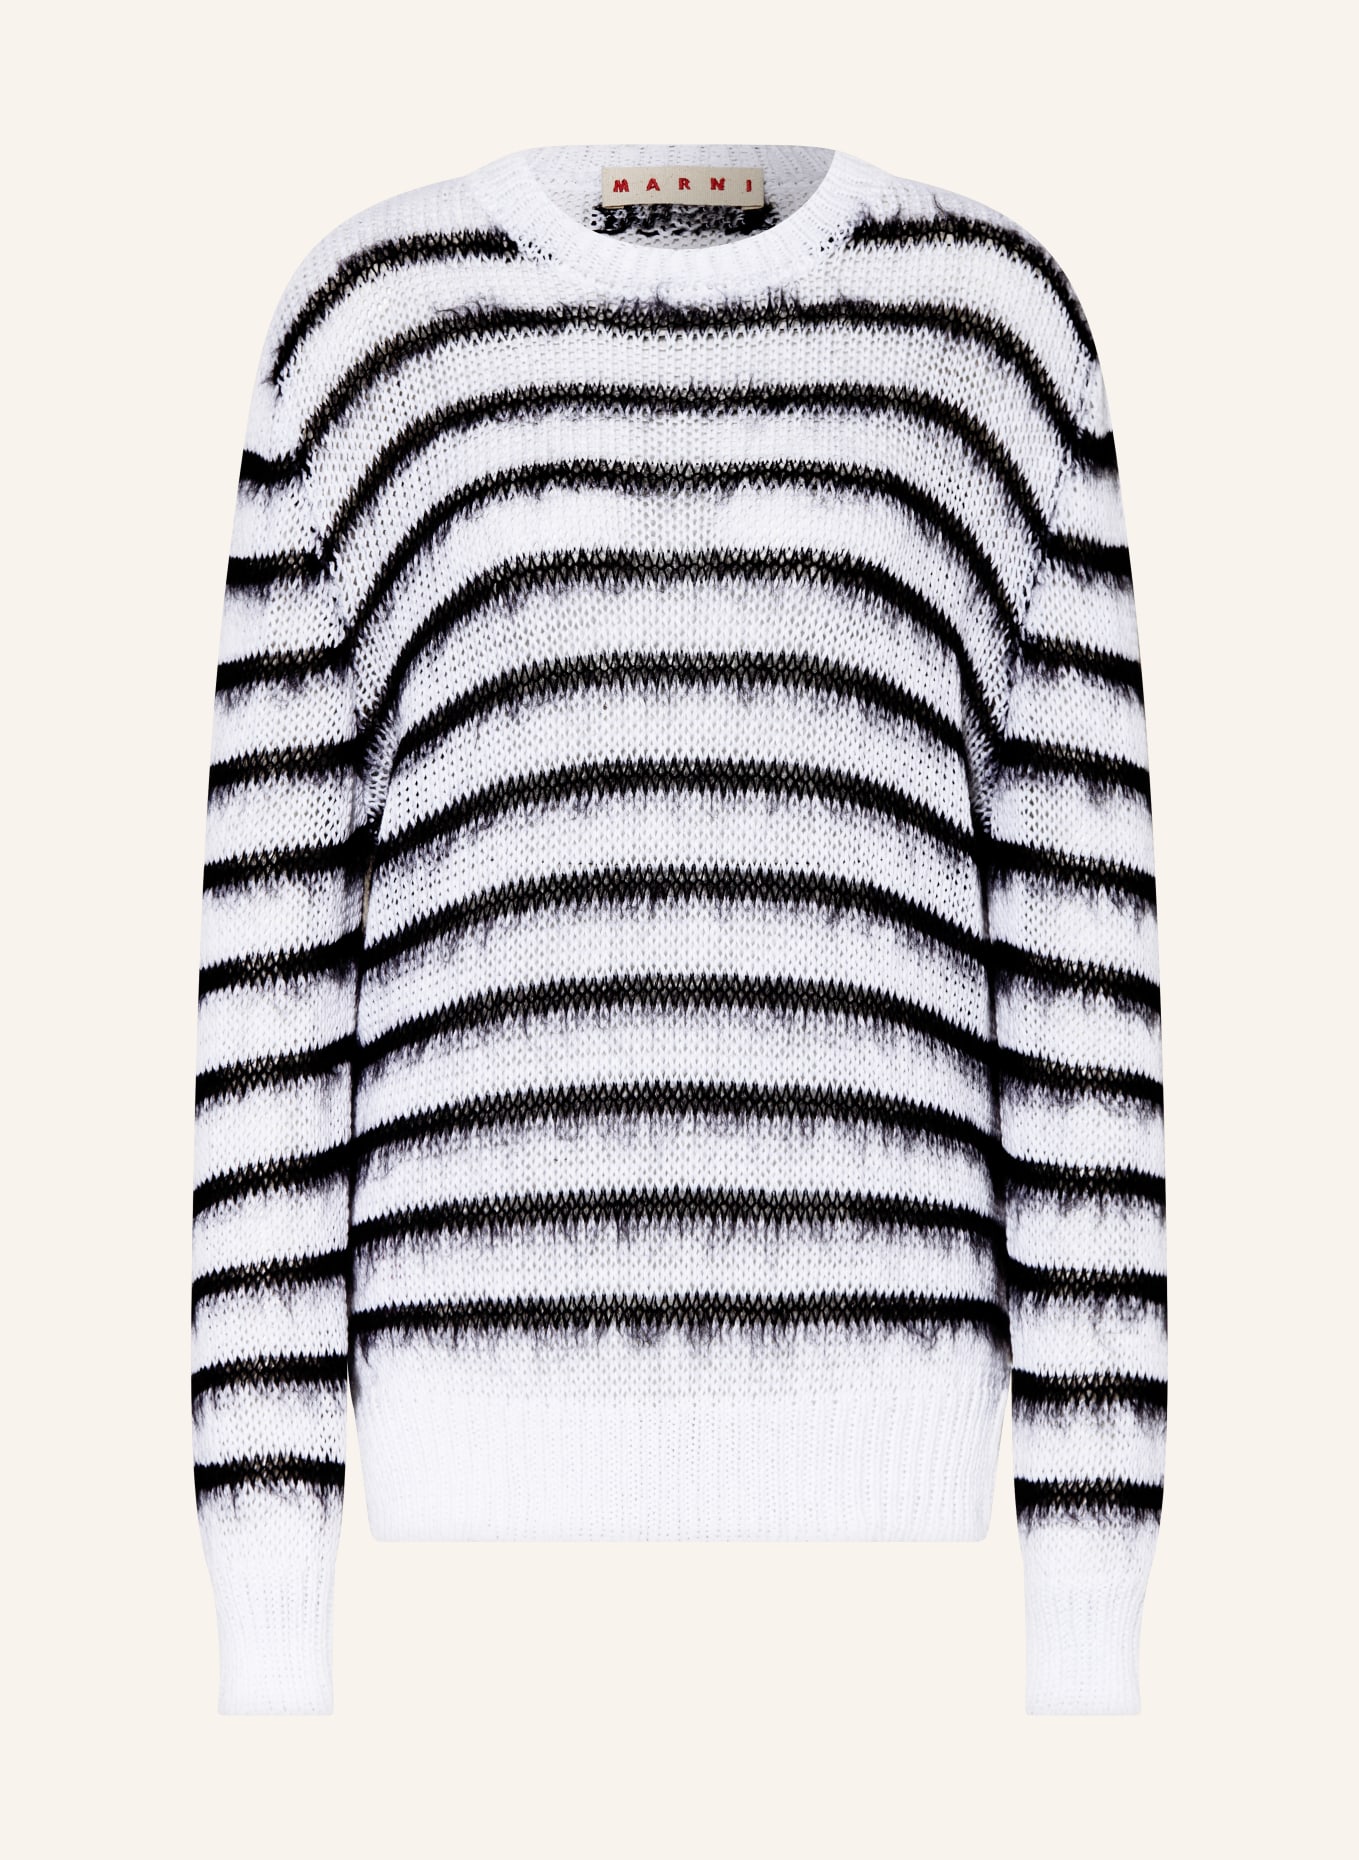 MARNI Oversized-Pullover, Farbe: SCHWARZ/ WEISS/ GRAU (Bild 1)